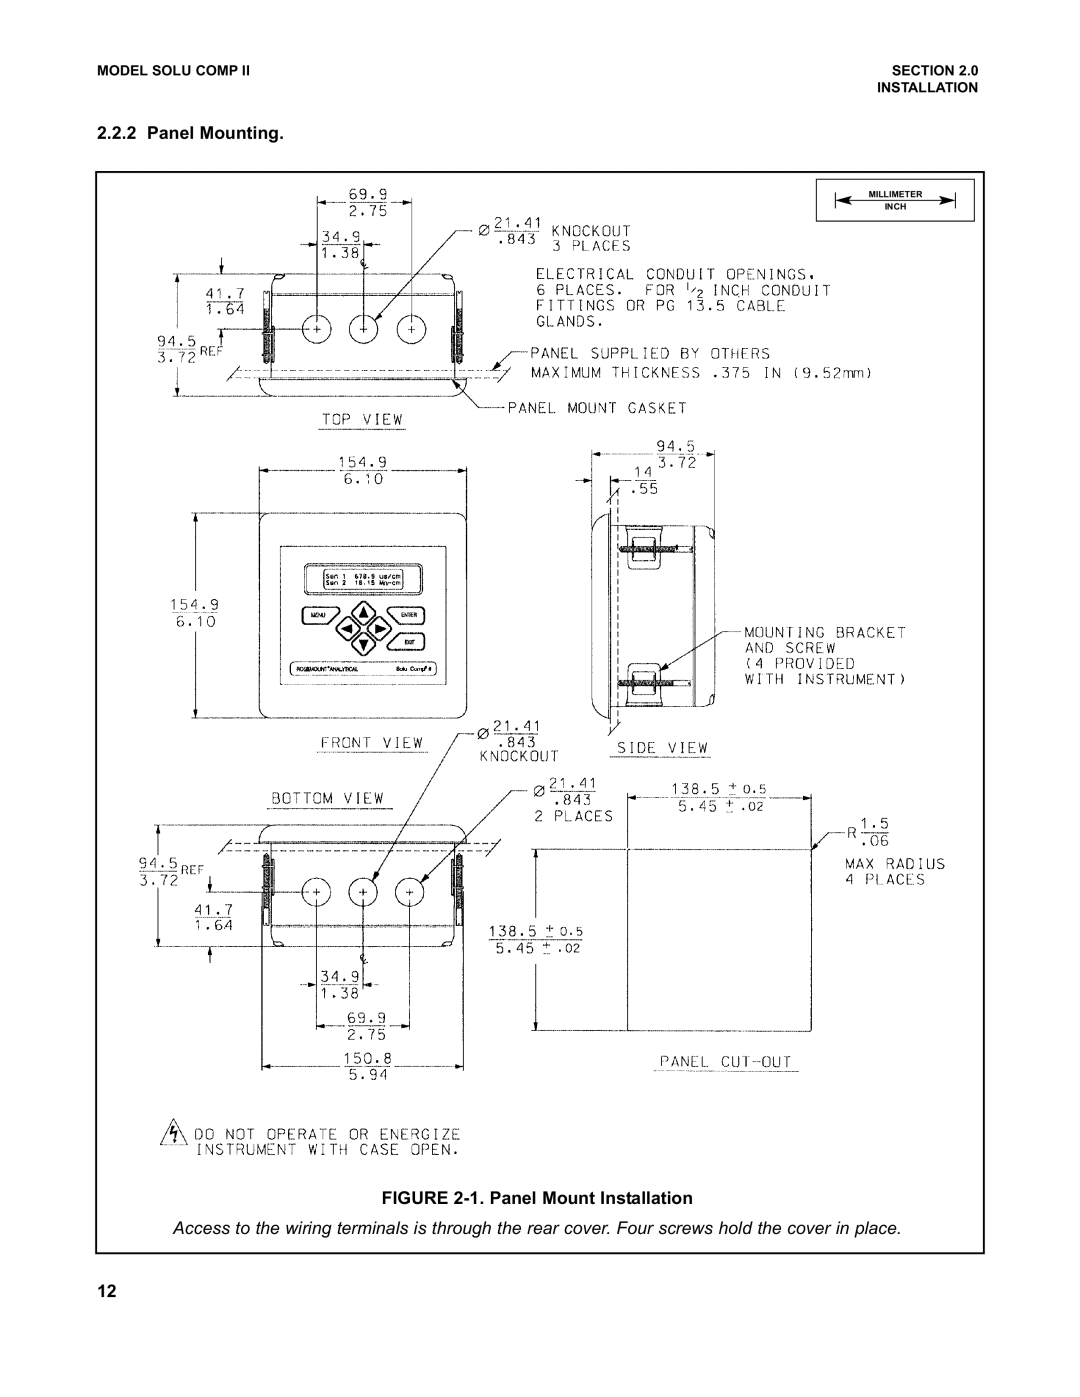 Emerson PN 51-1055pHC/rev.K instruction manual Panel Mounting, Panel Mount Installation 